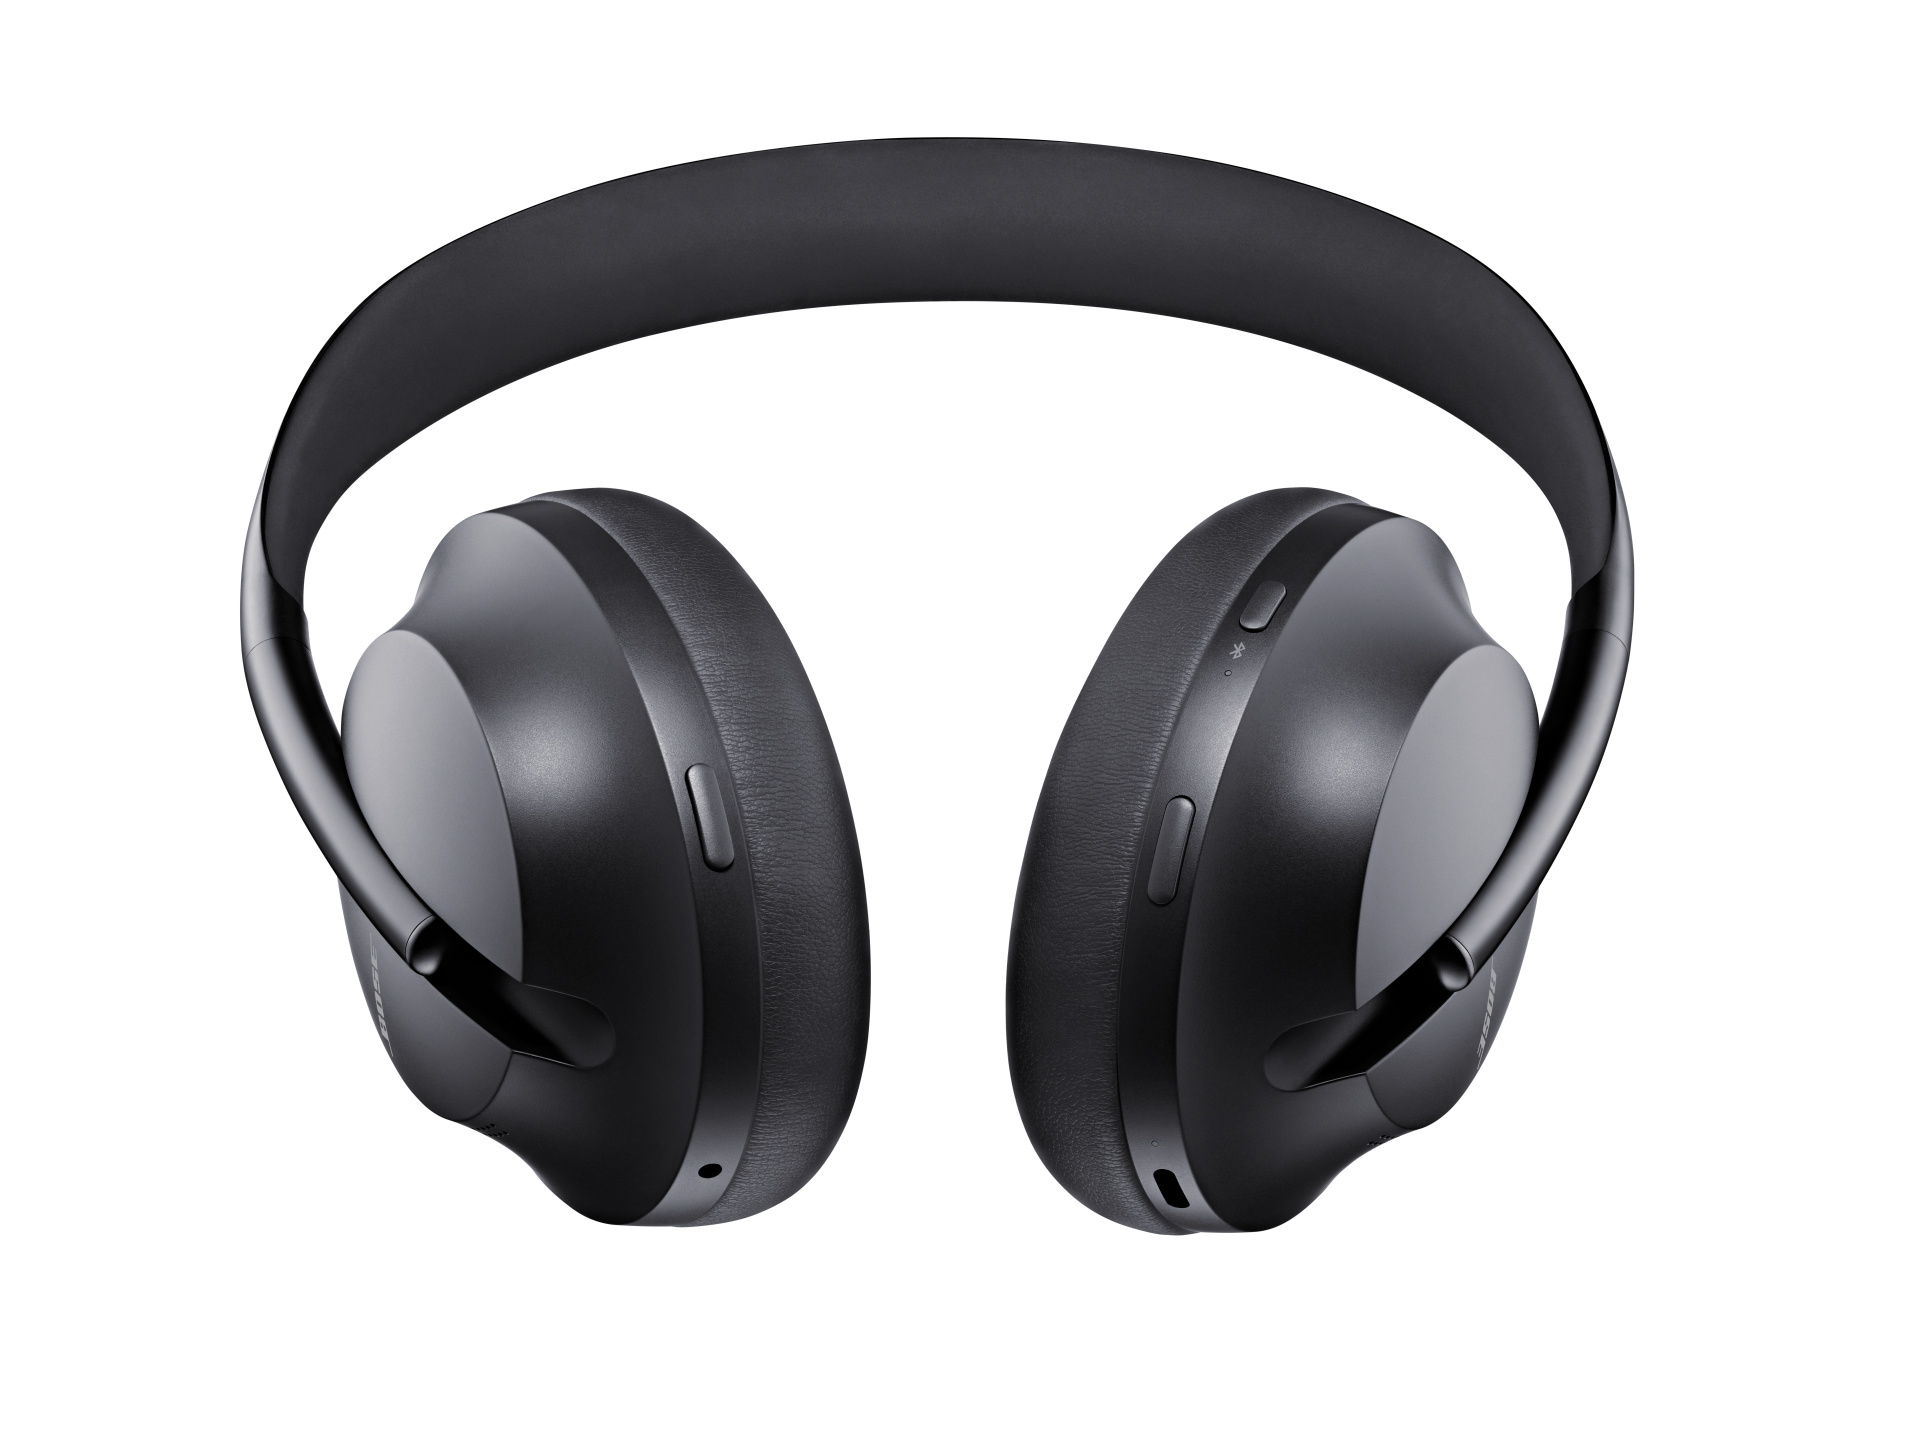 Bose Noise Cancelling Headphones 700 over-ear Wireless Bluetooth Earphones, Black - image 6 of 10